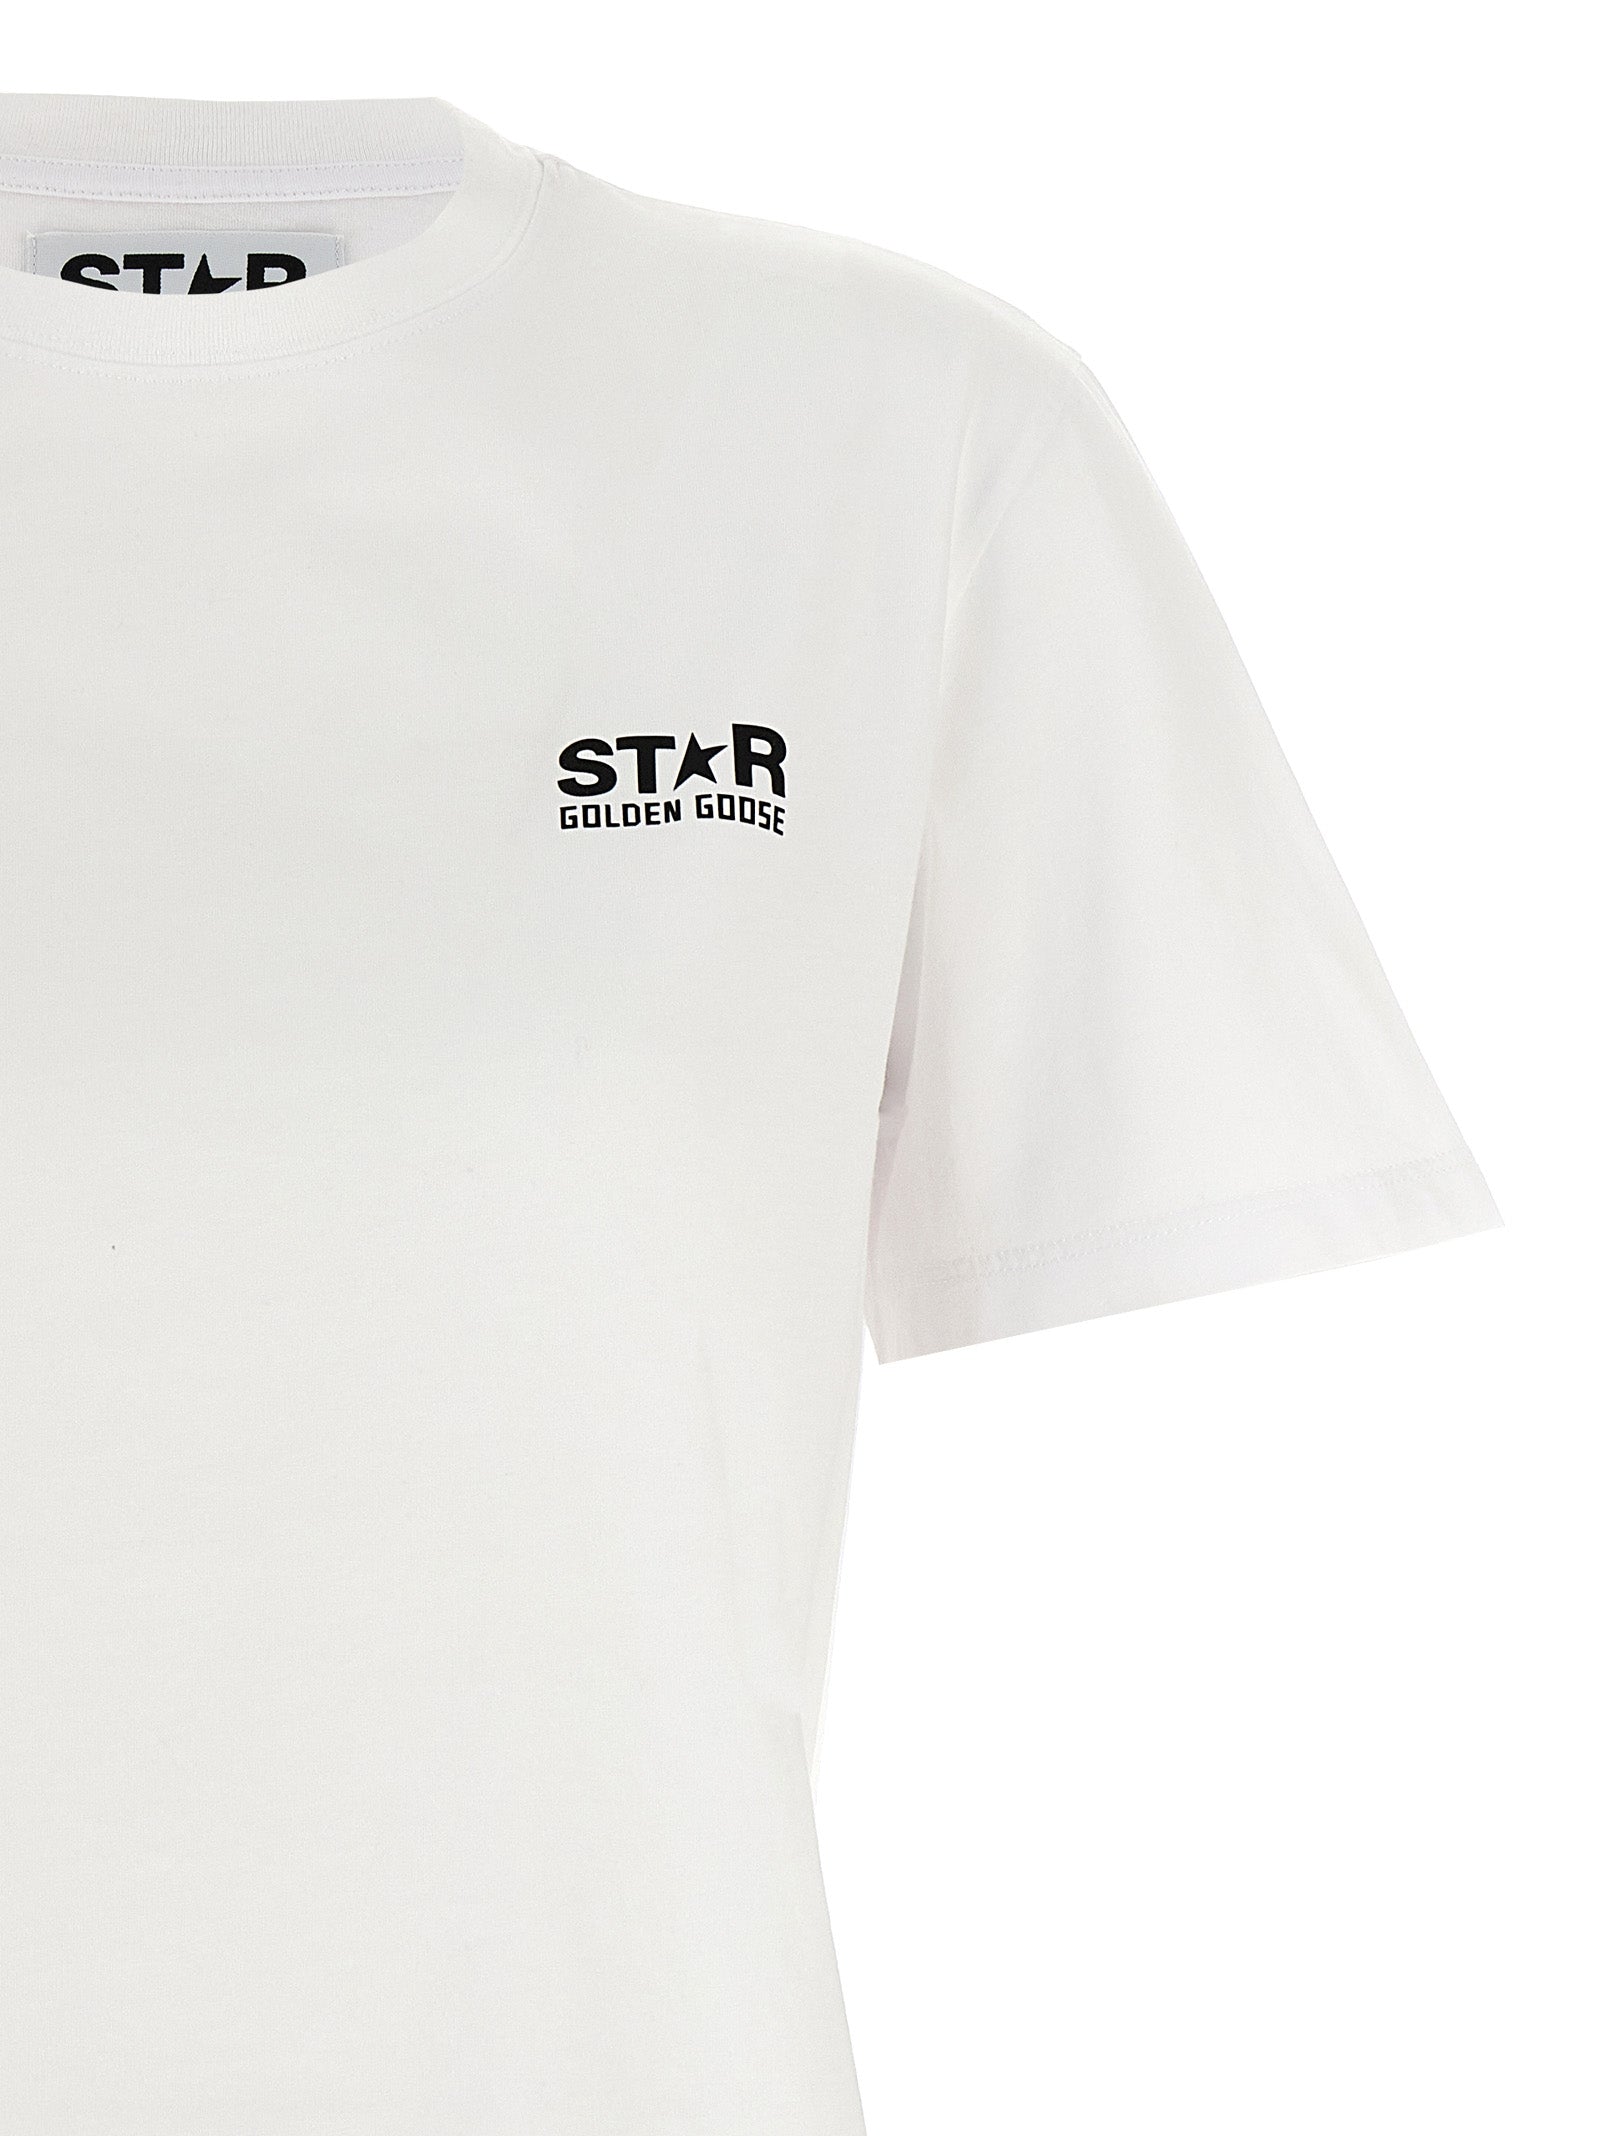 Shop Golden Goose Star T-shirt White/black